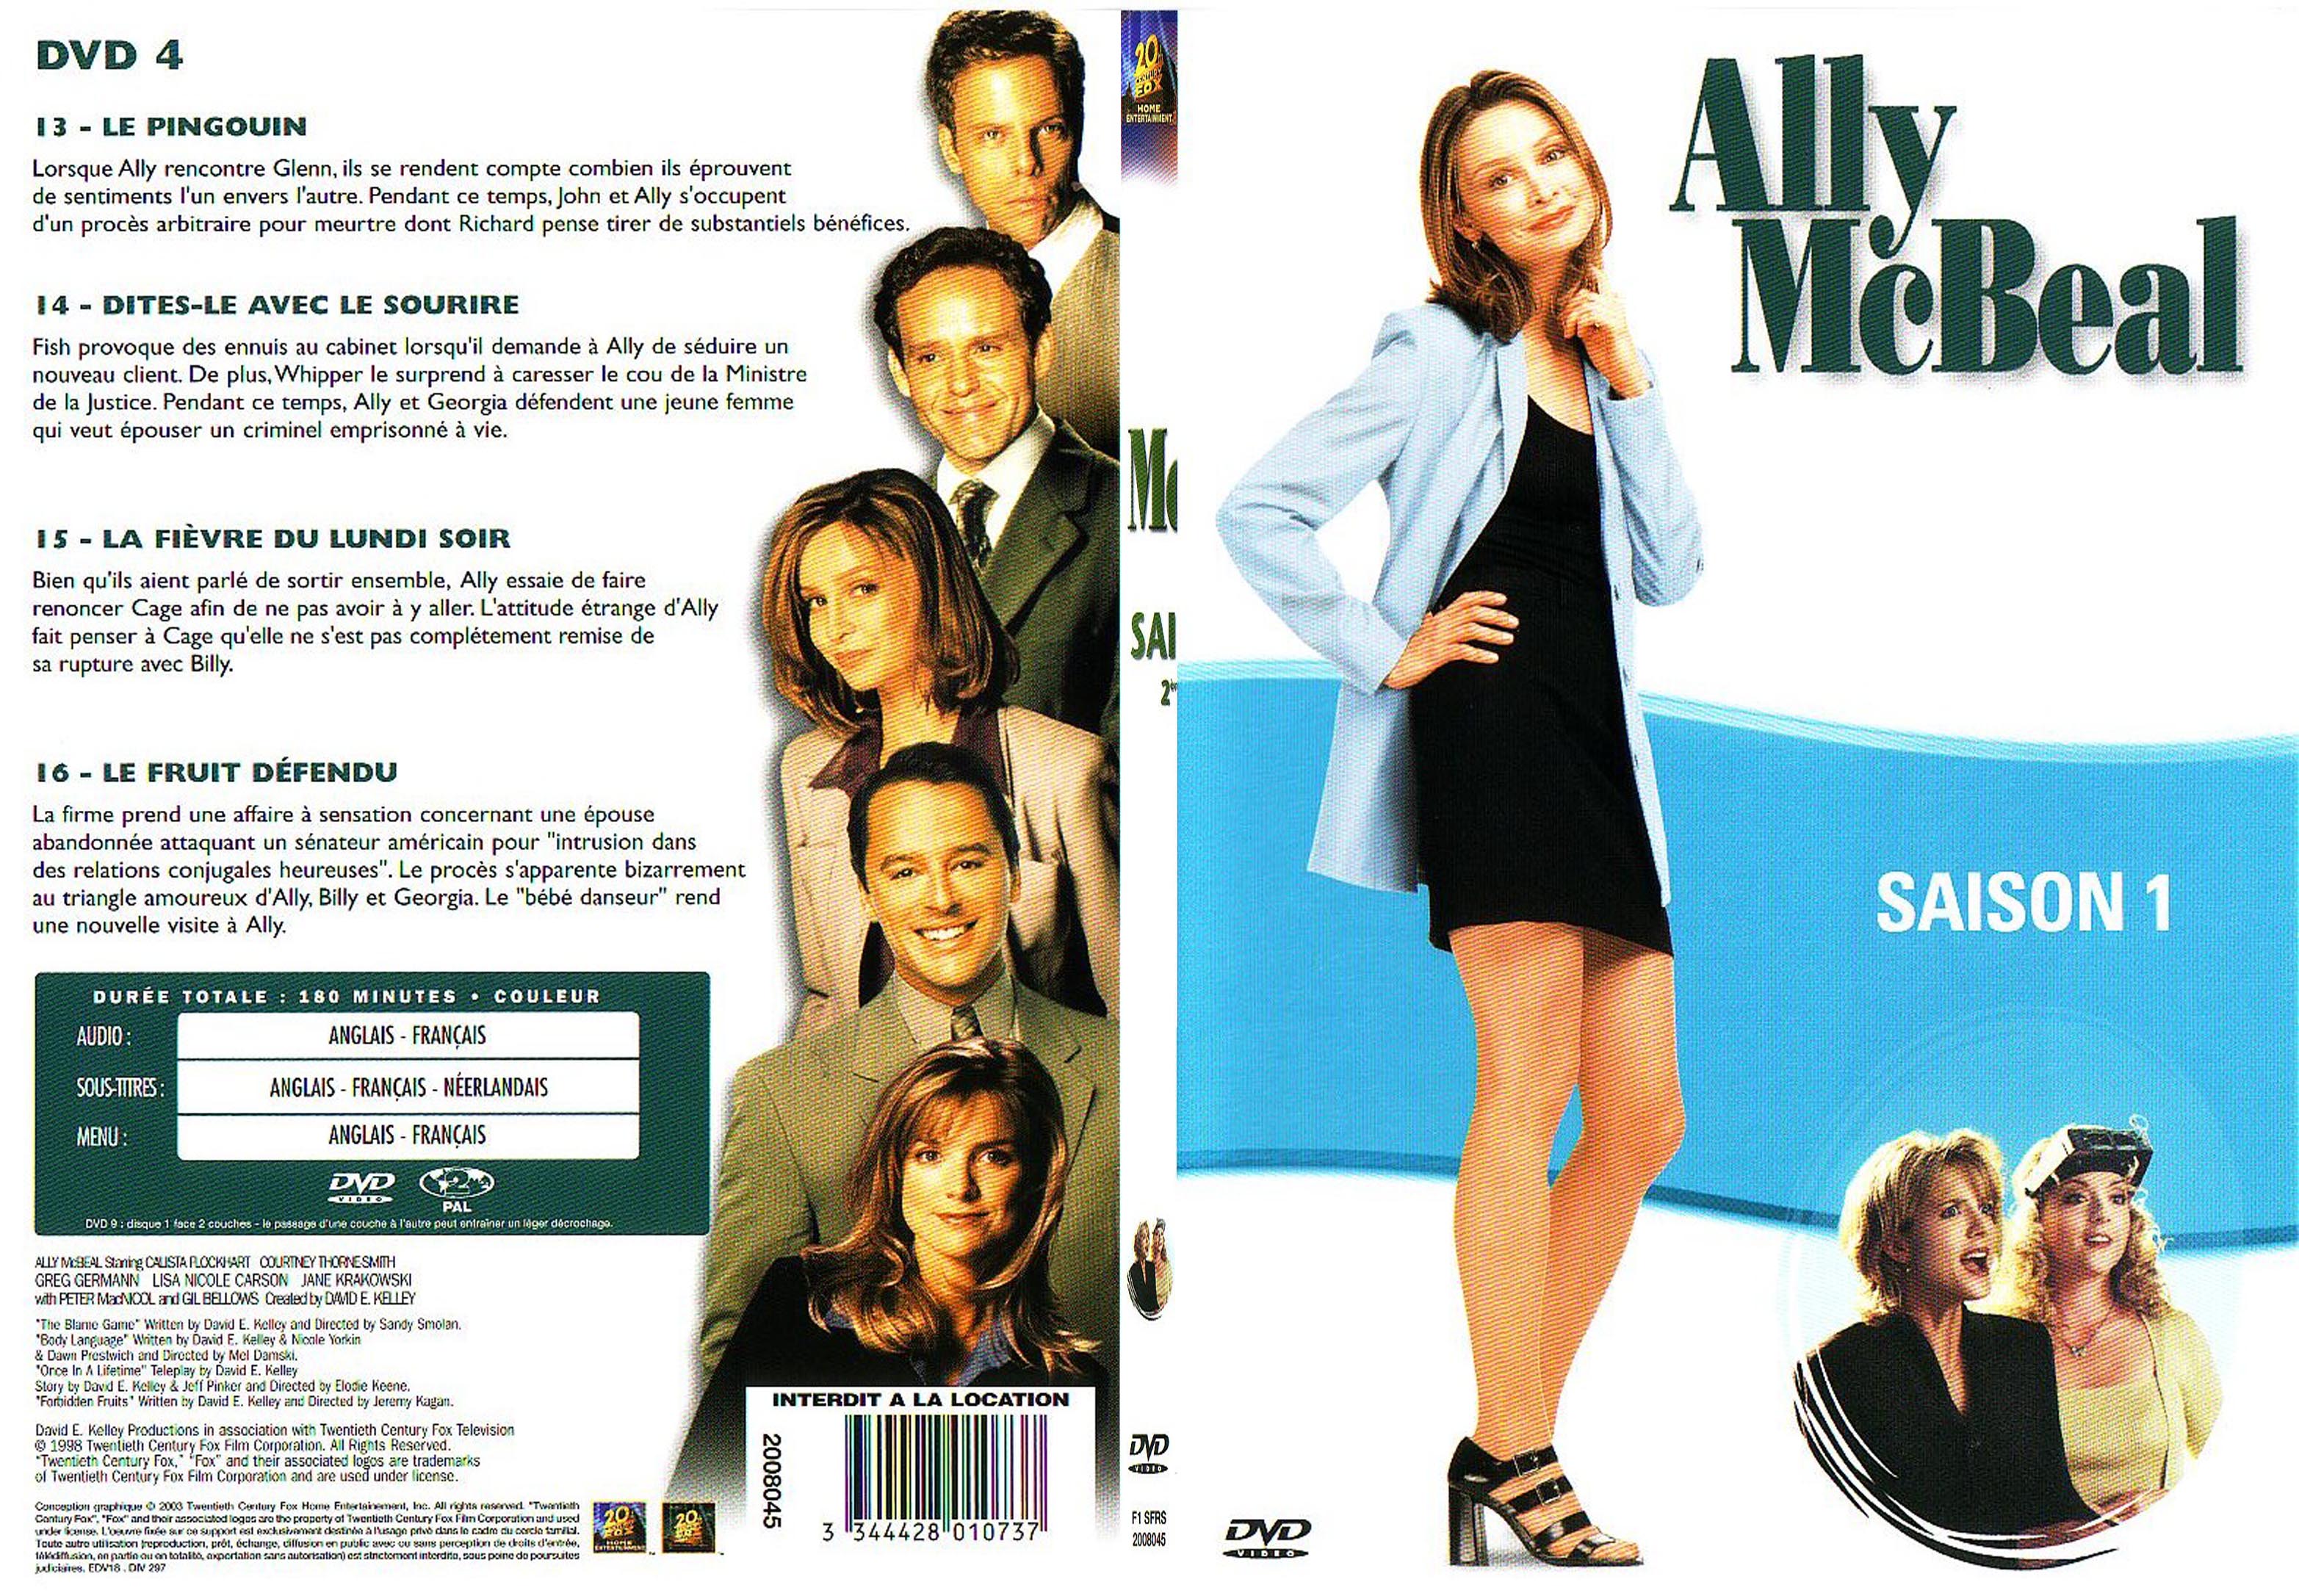 Jaquette DVD Ally McBeal saison 1 dvd 4 - SLIM